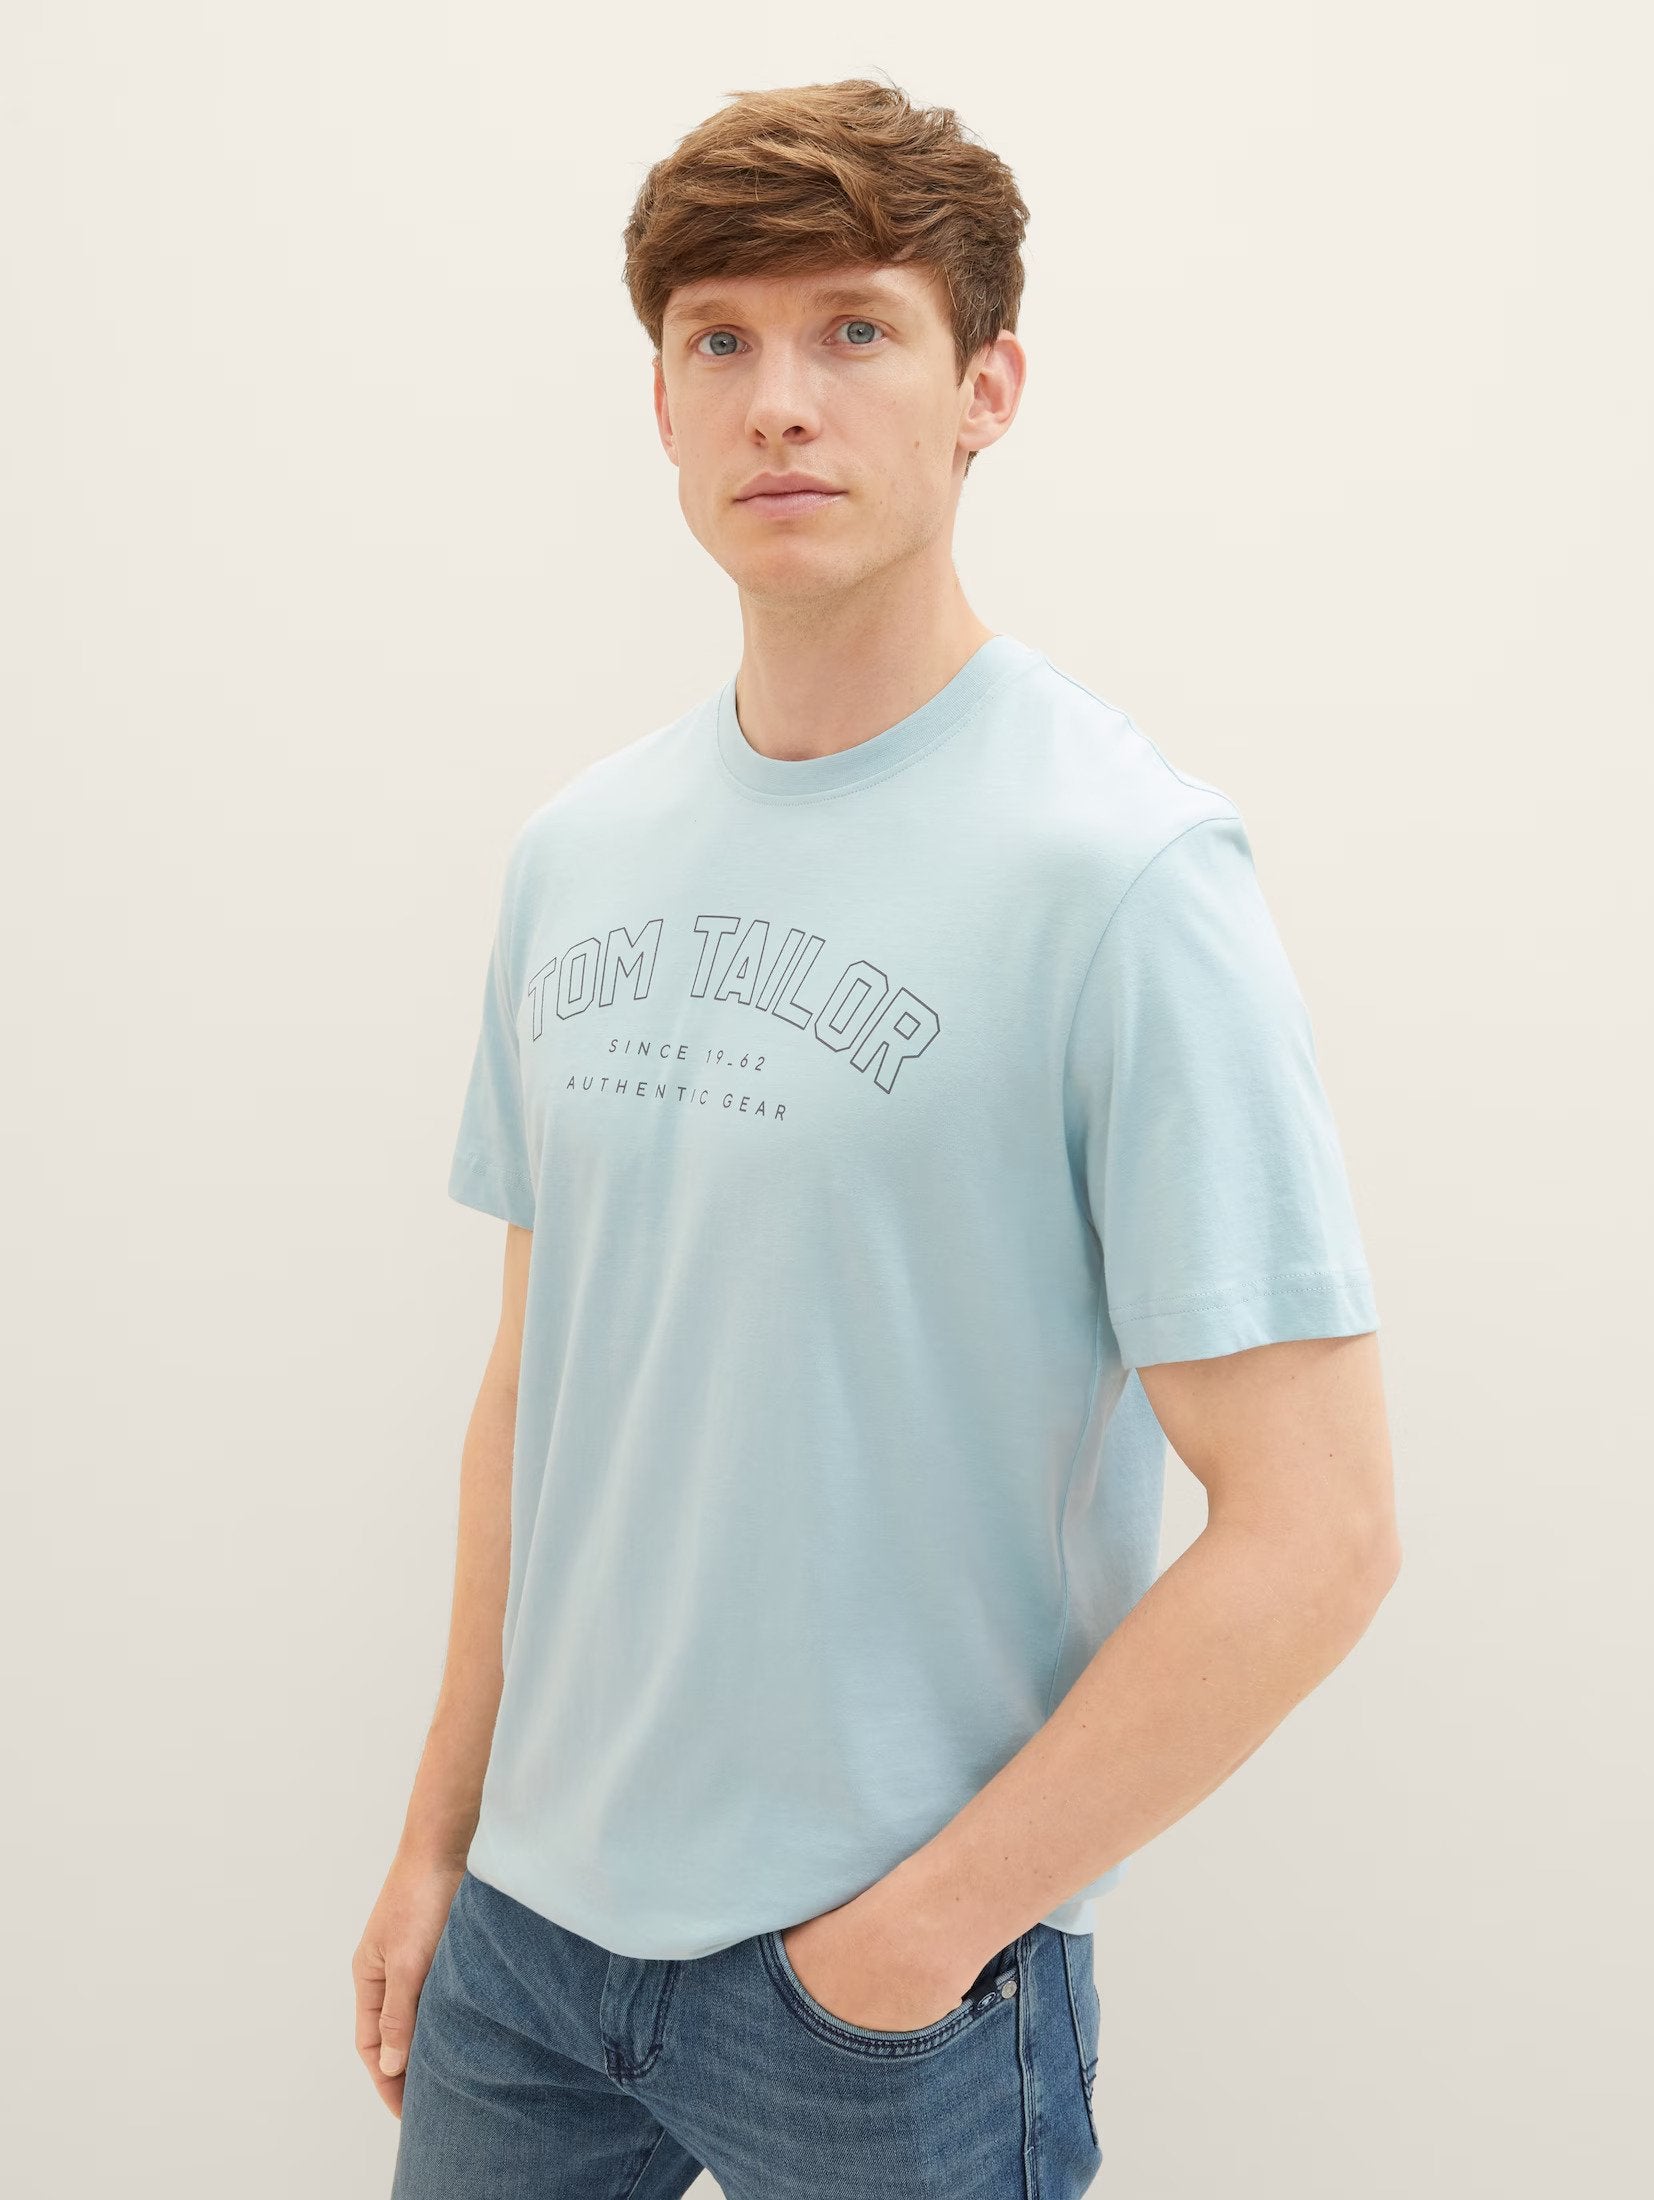 Tom Tailor Logo Printed Light Blue T shirt